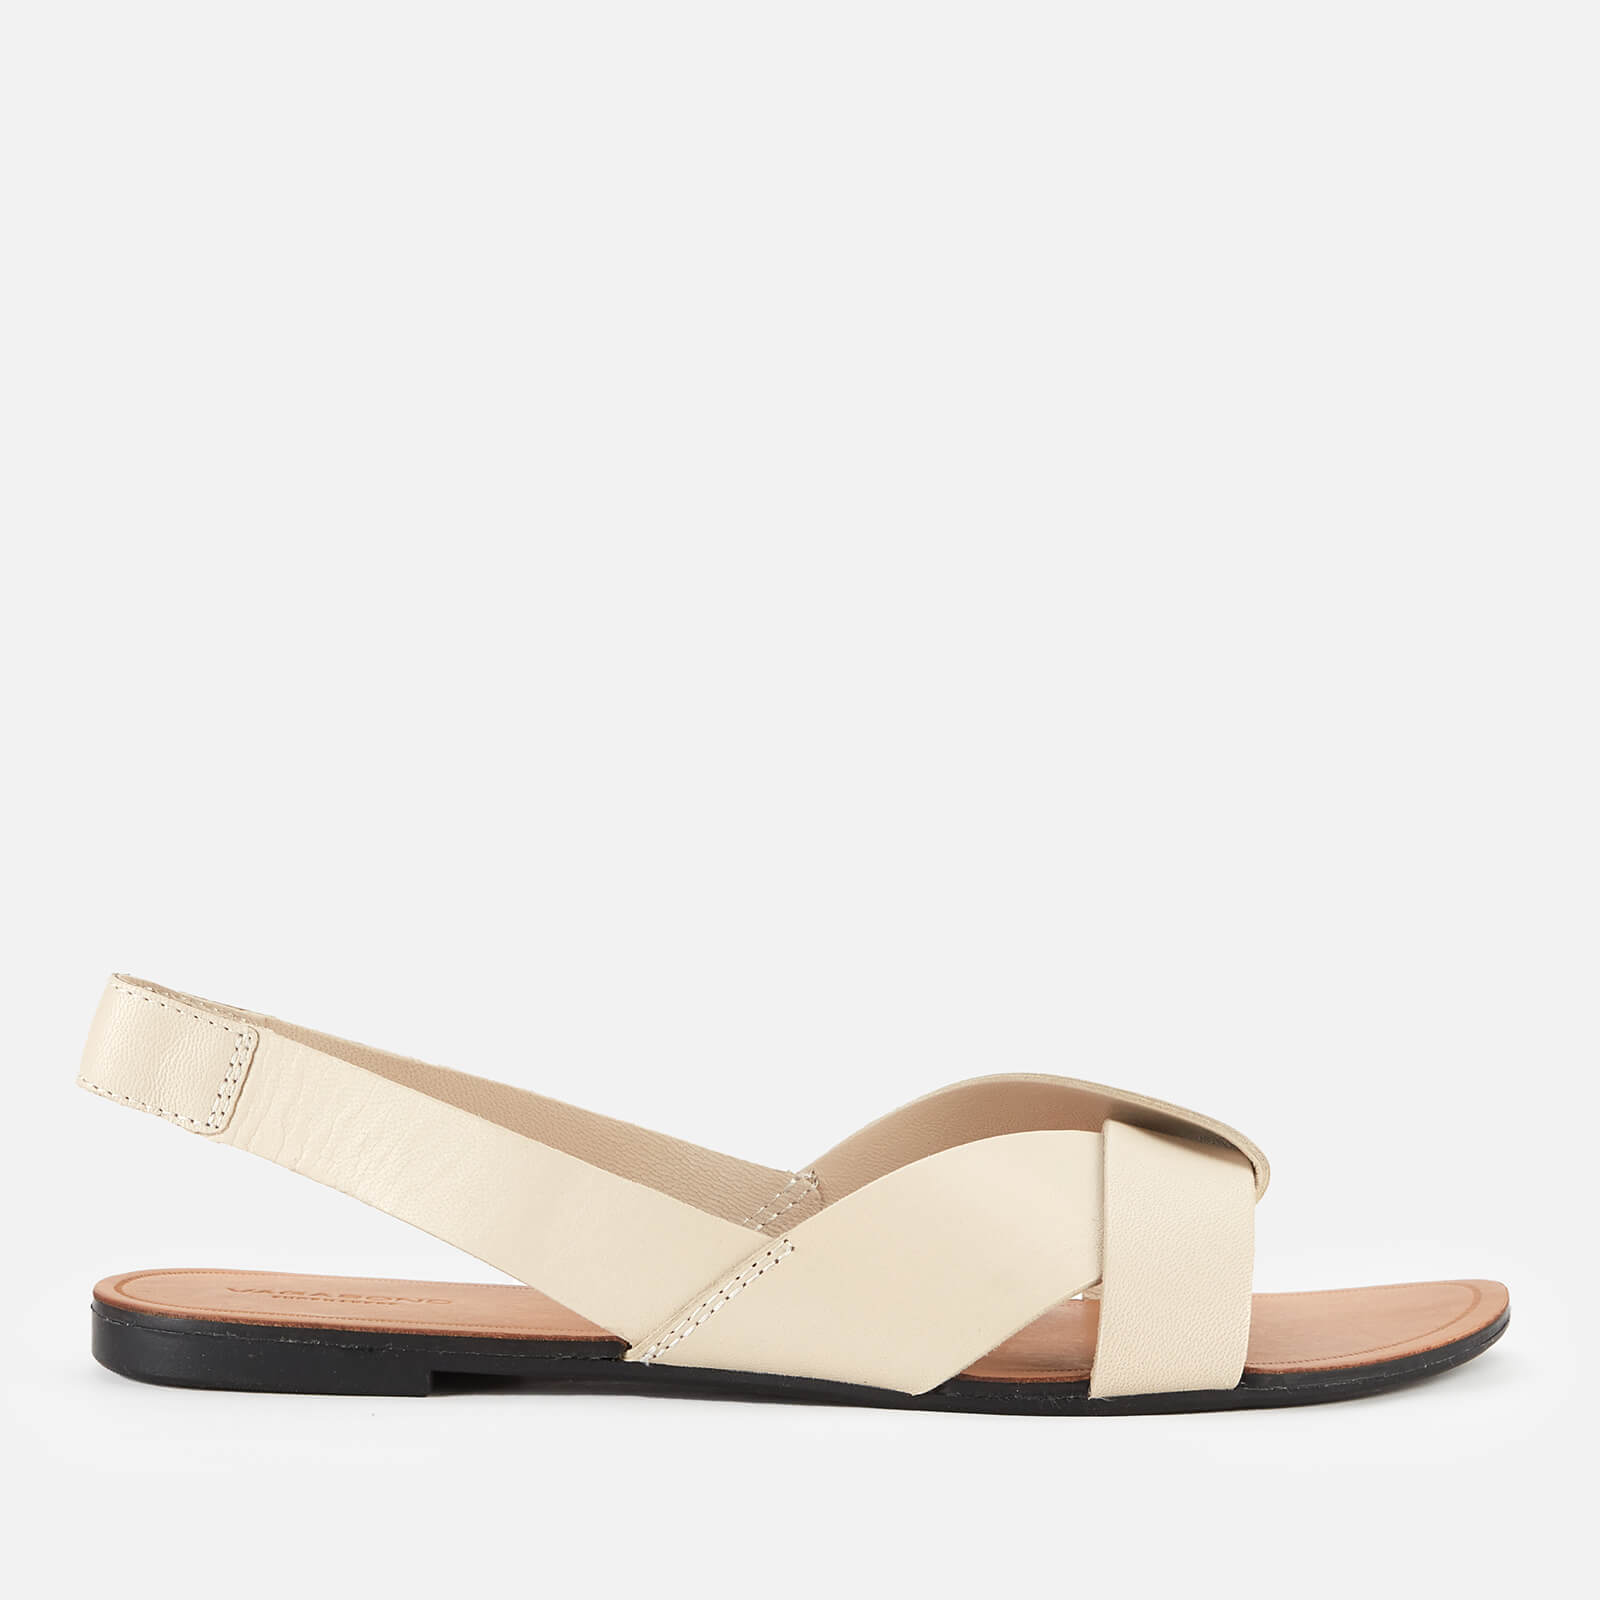 Vagabond Women's Tia Leather Flat Sandals - Off White - UK 4